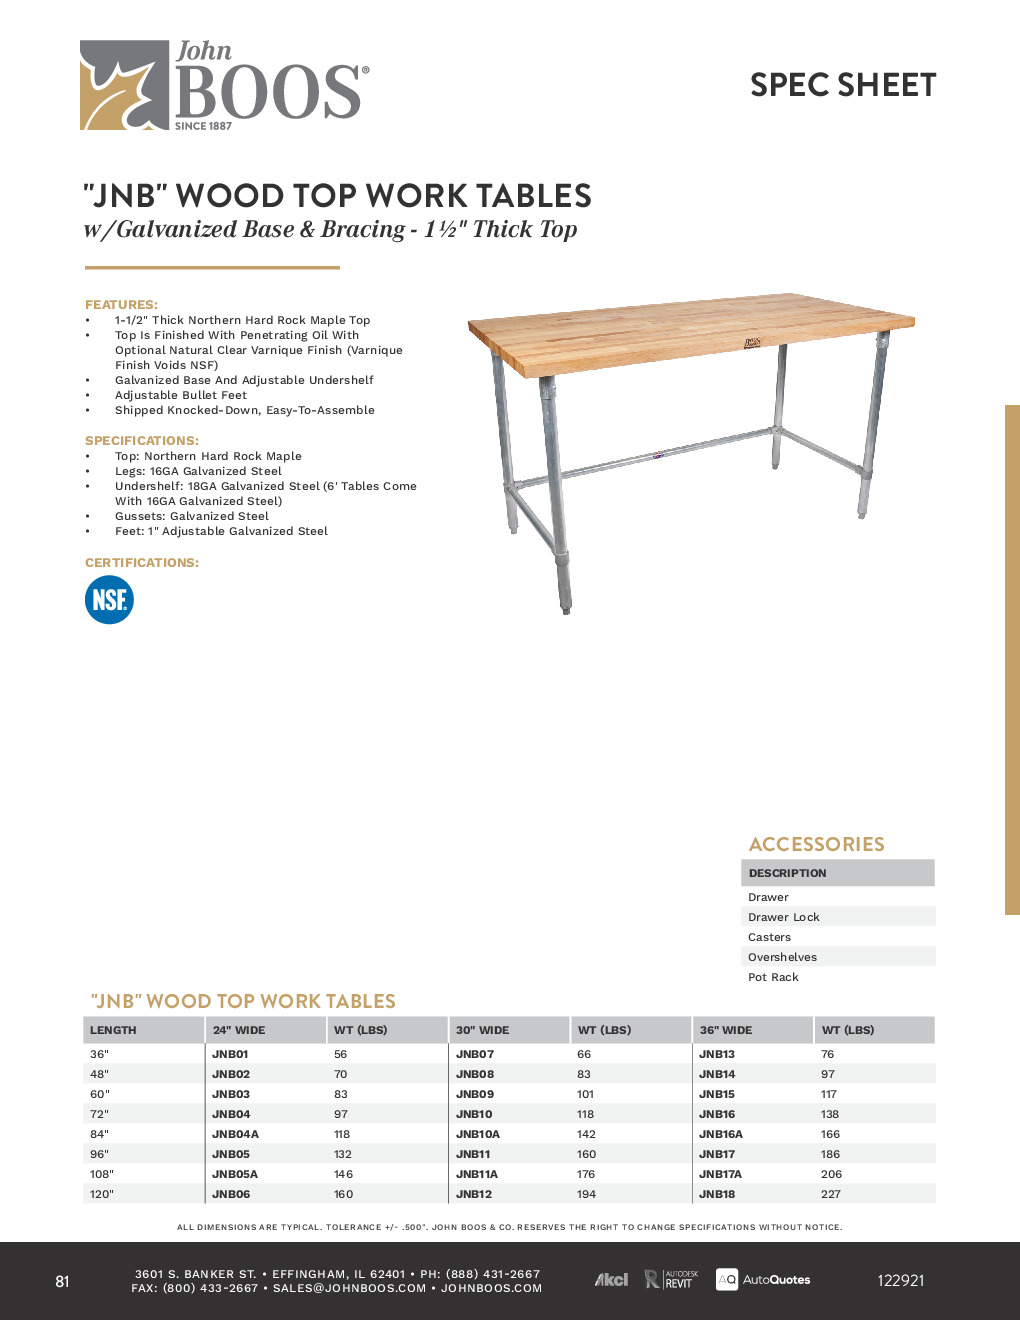 John Boos JNB03-X Wood Top Work Table